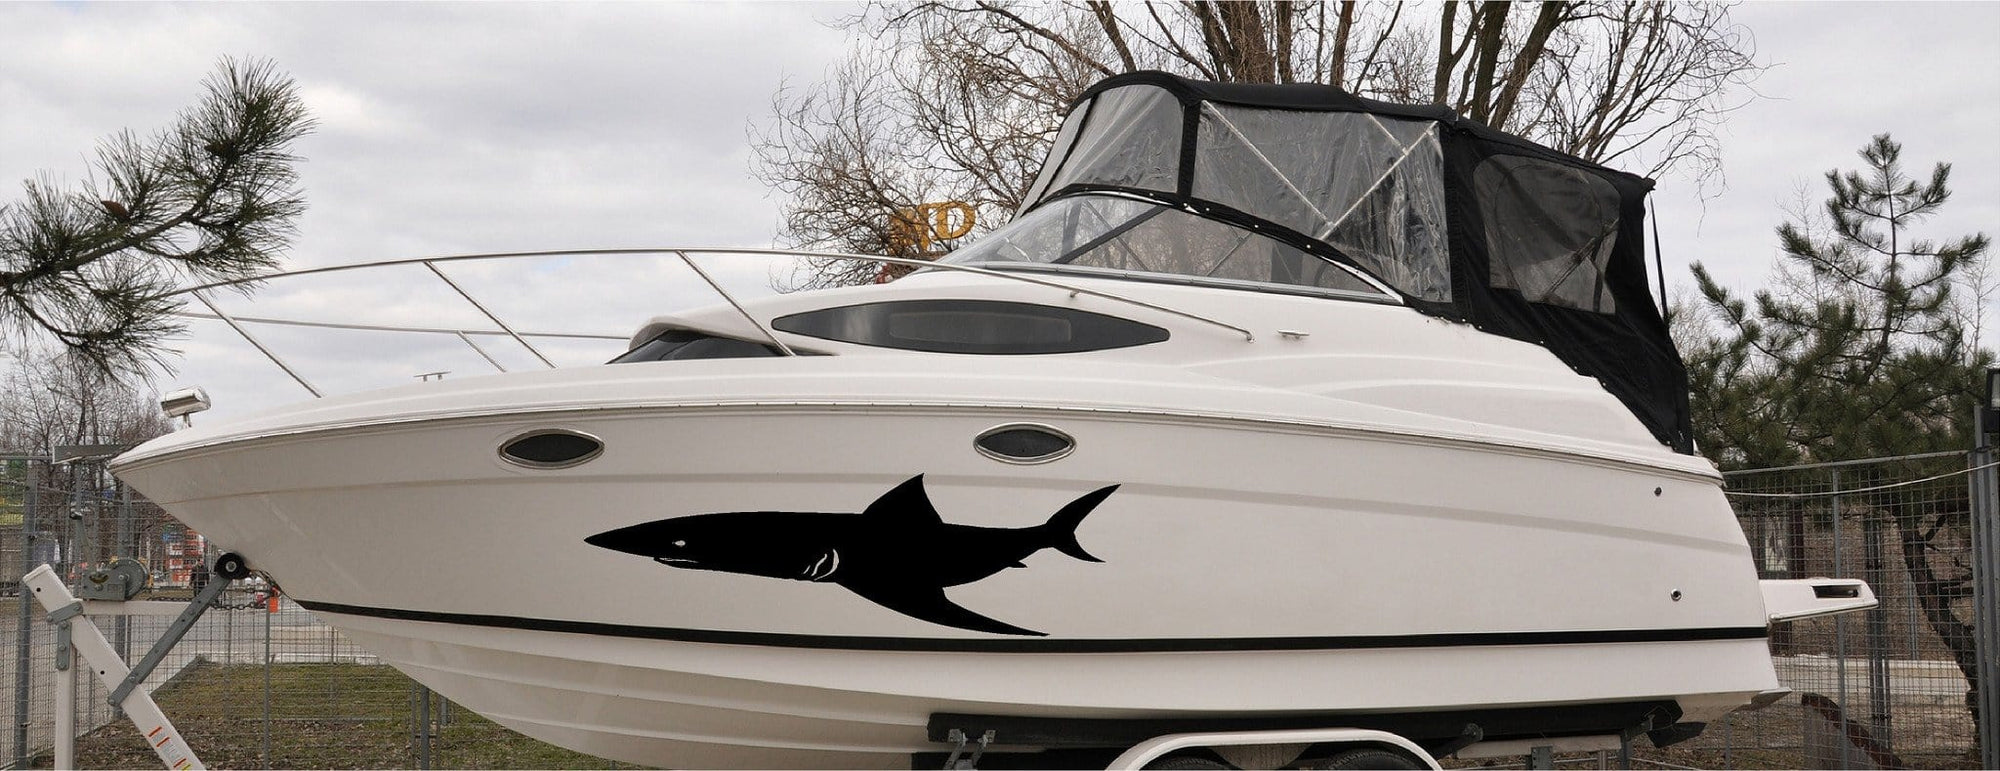 shark vinyl decal on boat